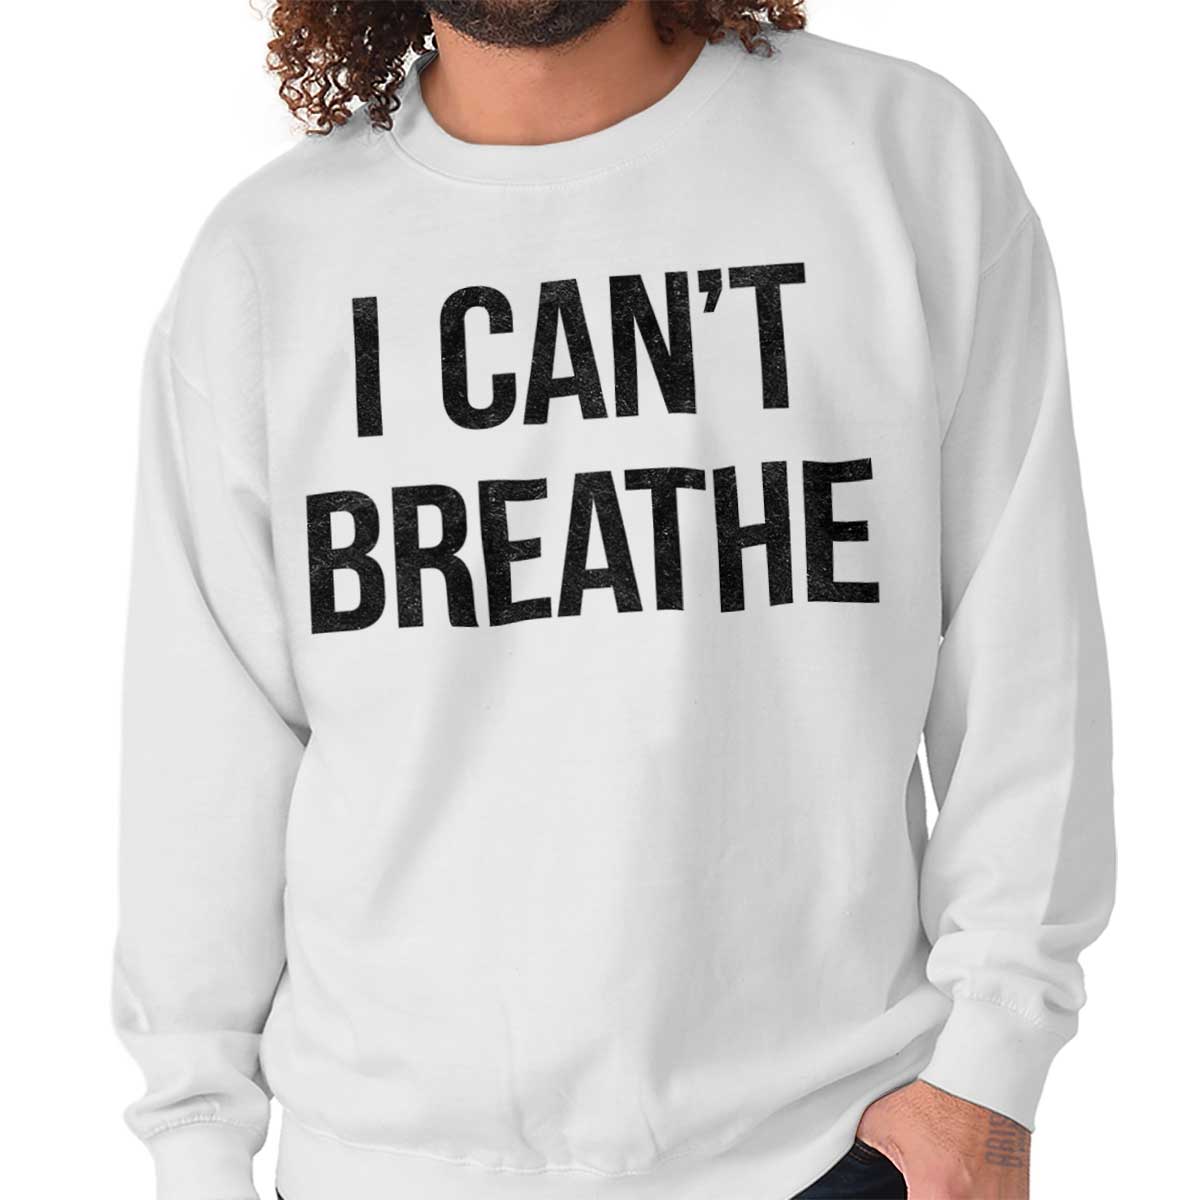 Cant Breathe Black Lives Matter BLM Protest Hoodies Sweat Shirts Sweatshirts 